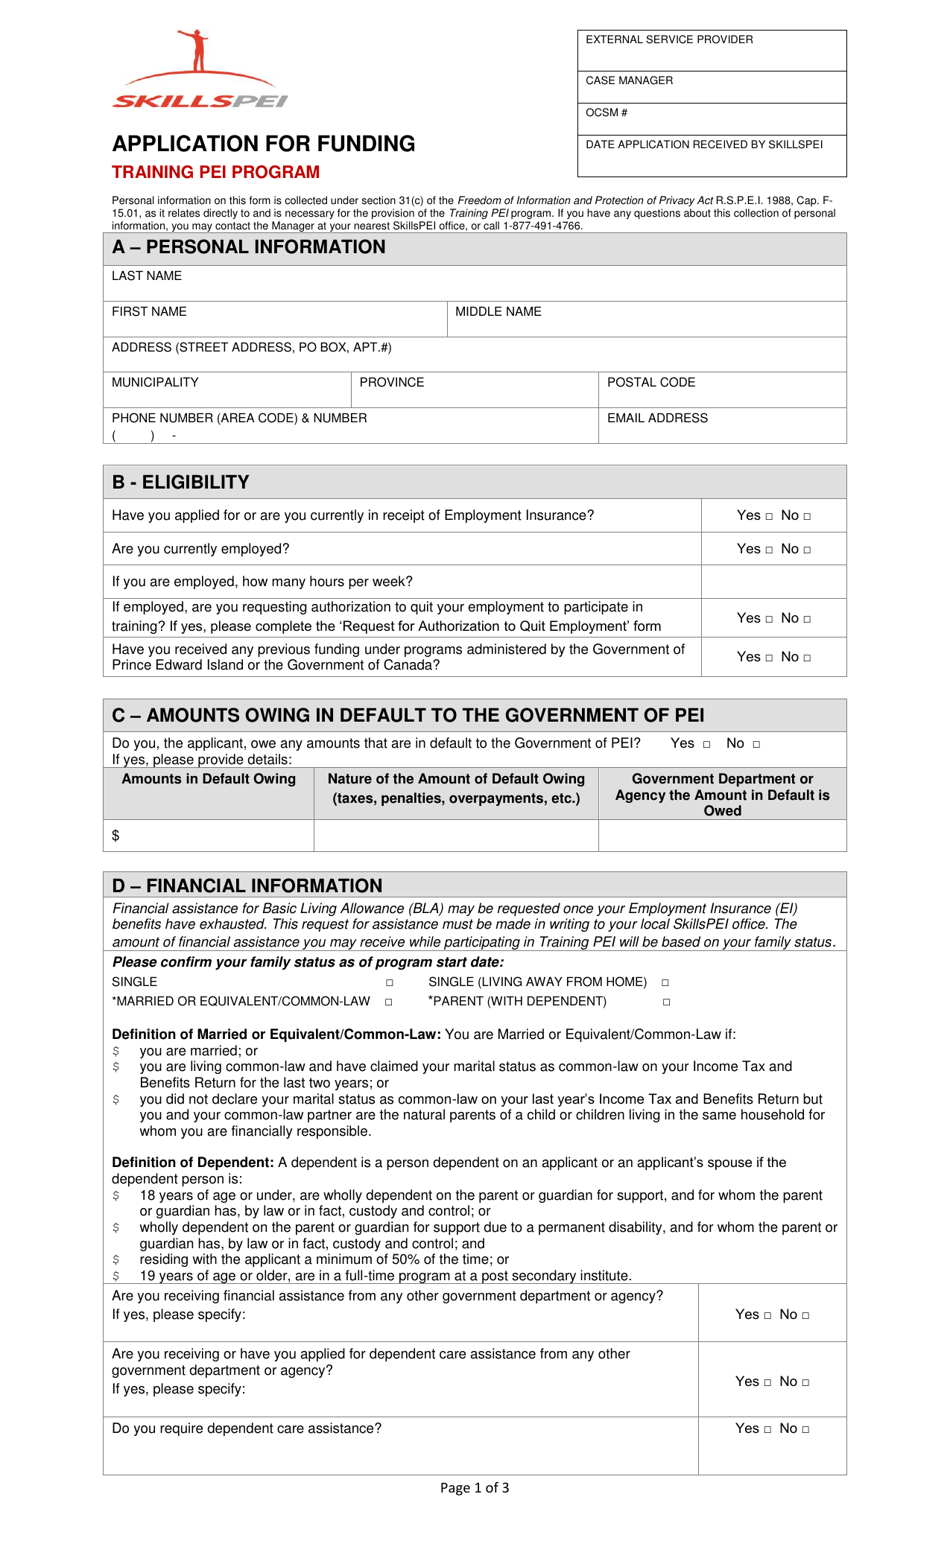 Application for Funding - Training Pei Program - Prince Edward Island, Canada, Page 1